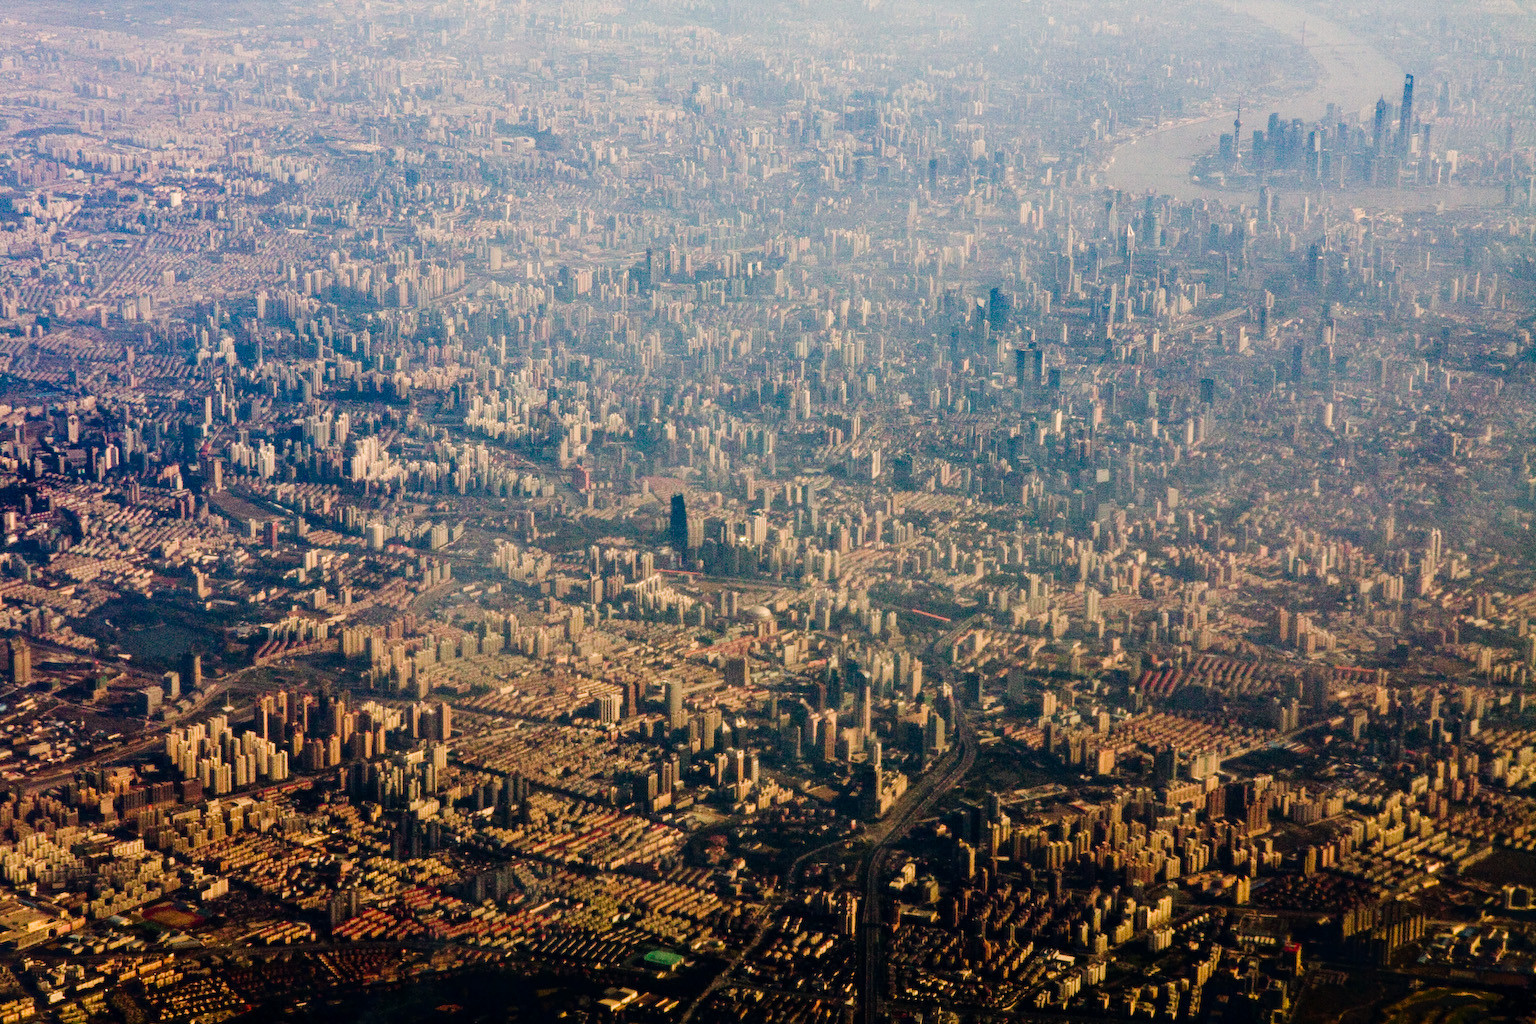 The massive, sprawling population of Shanghai